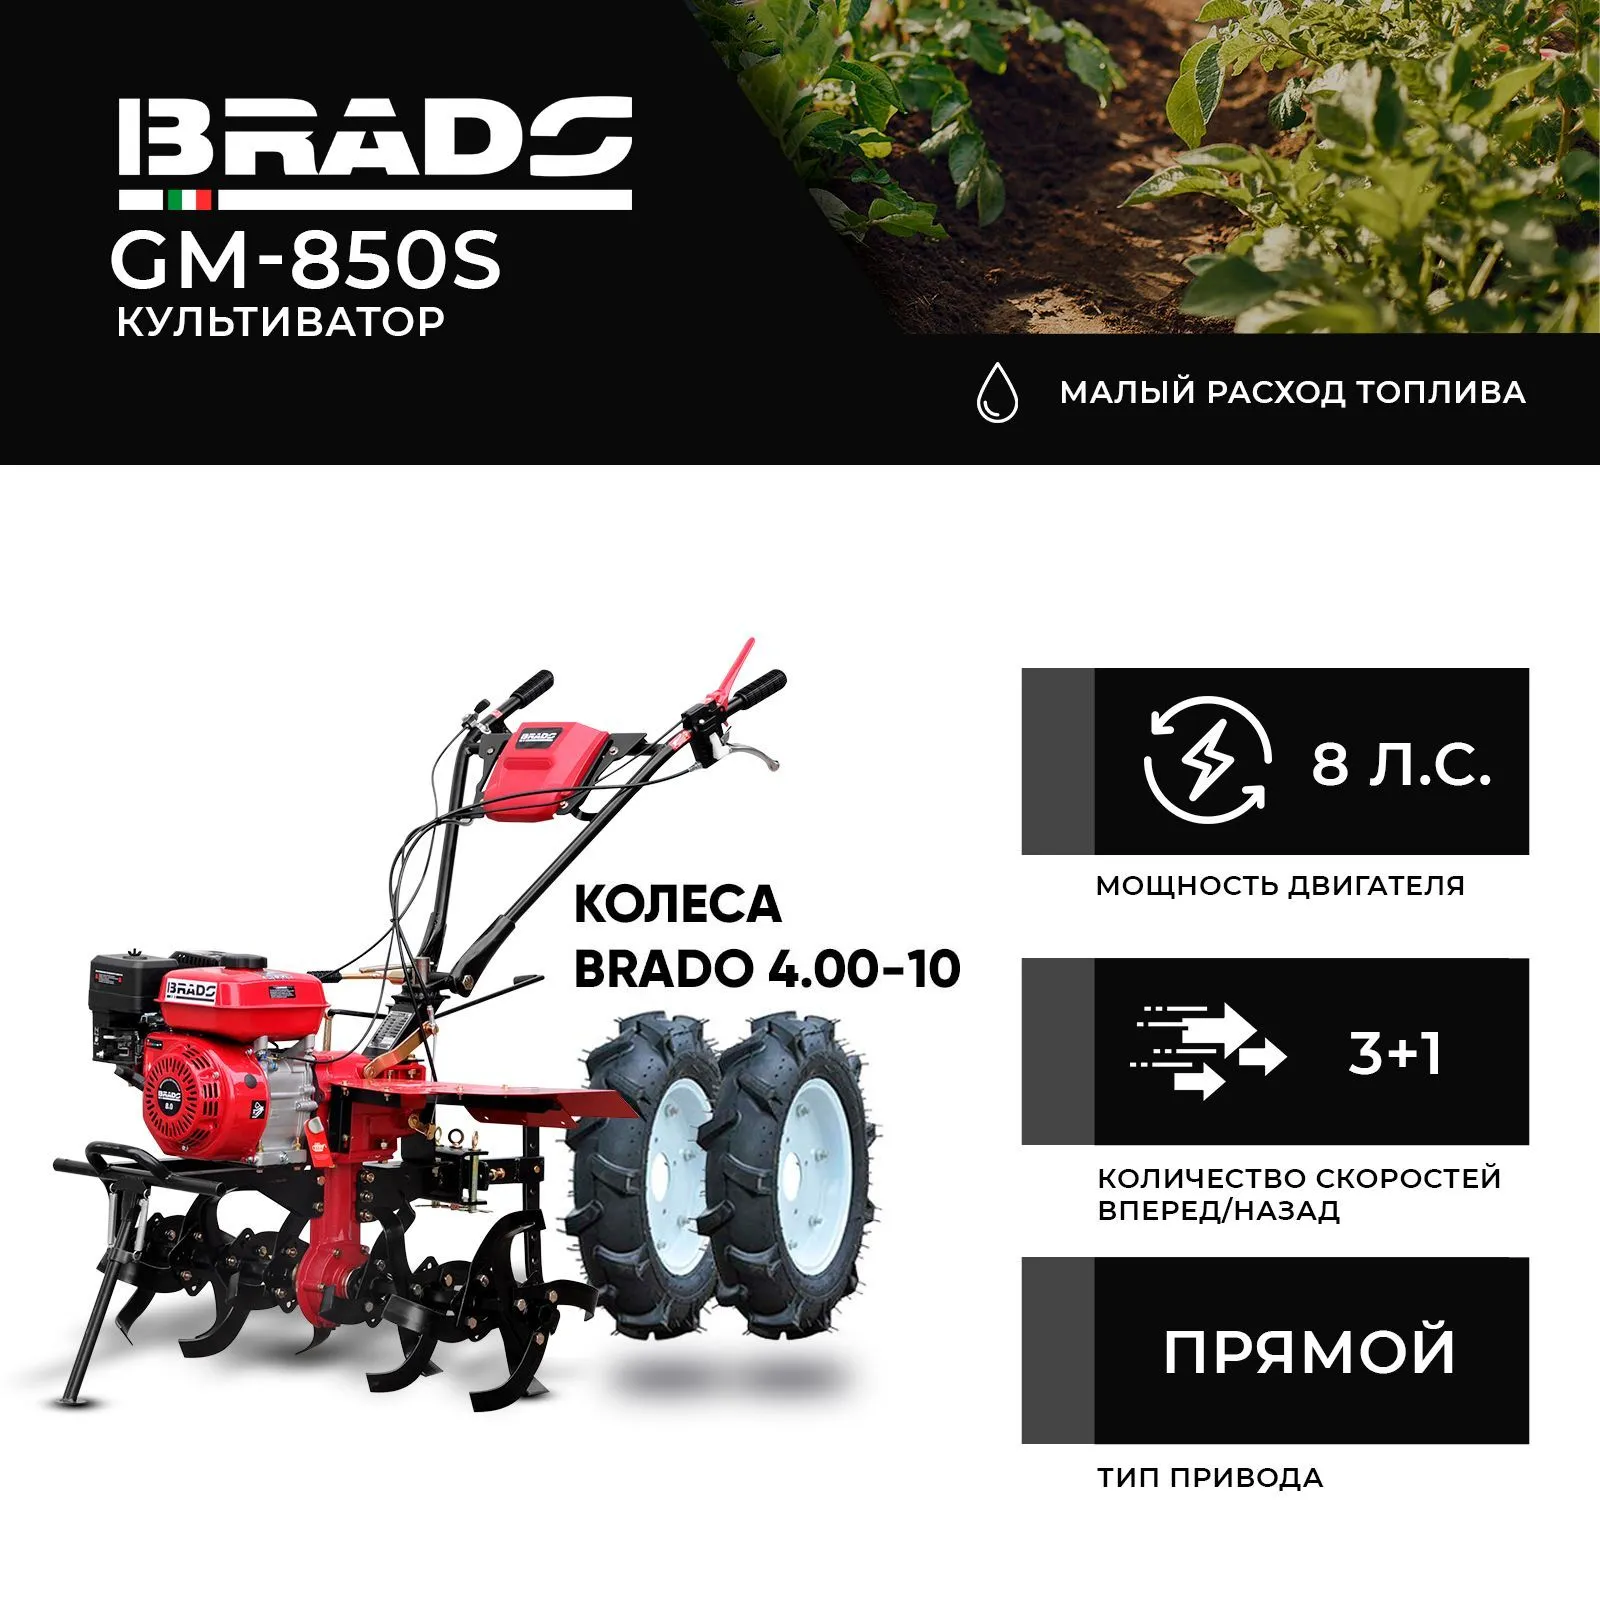 Brado GM-850S + колеса Brado 4.00-10 (2000290870022)